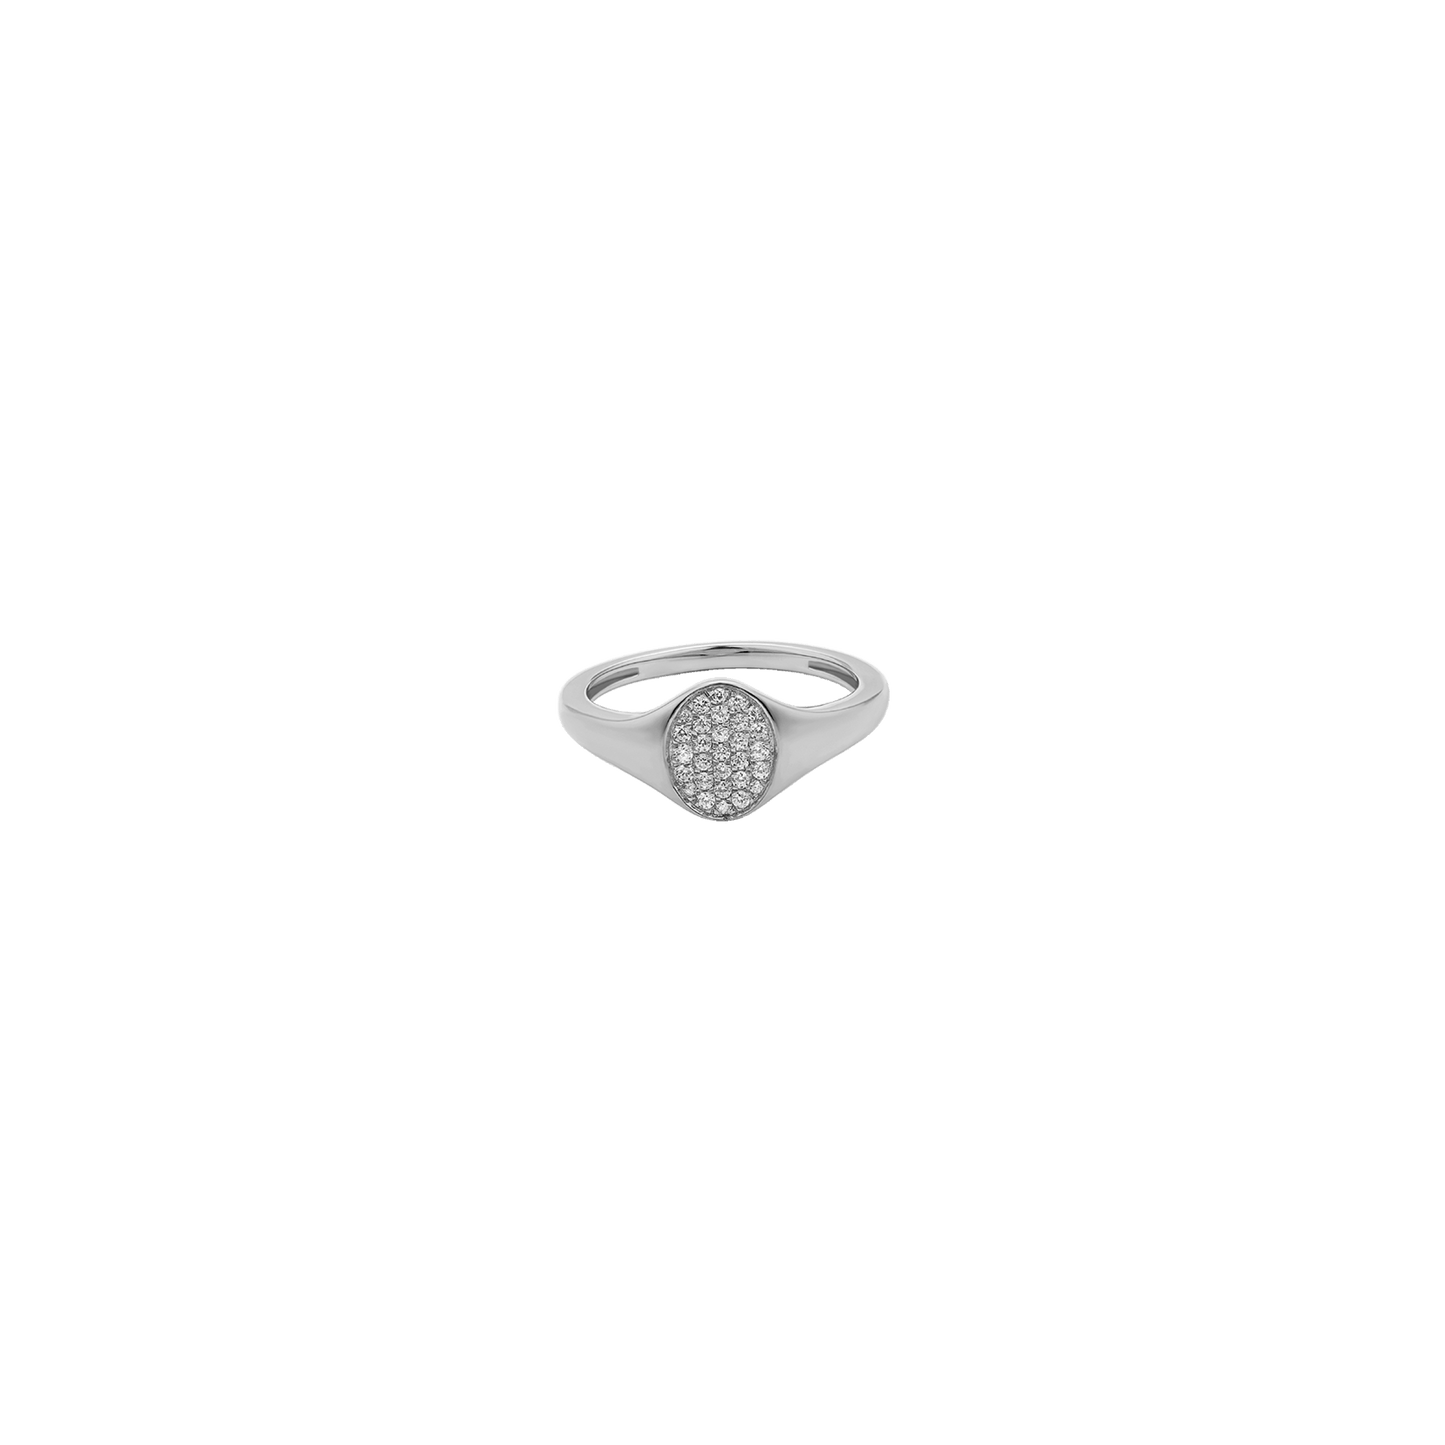 Oval Signet Diamond Ring - 14K White Gold Rings 14K Solid Gold US 4 